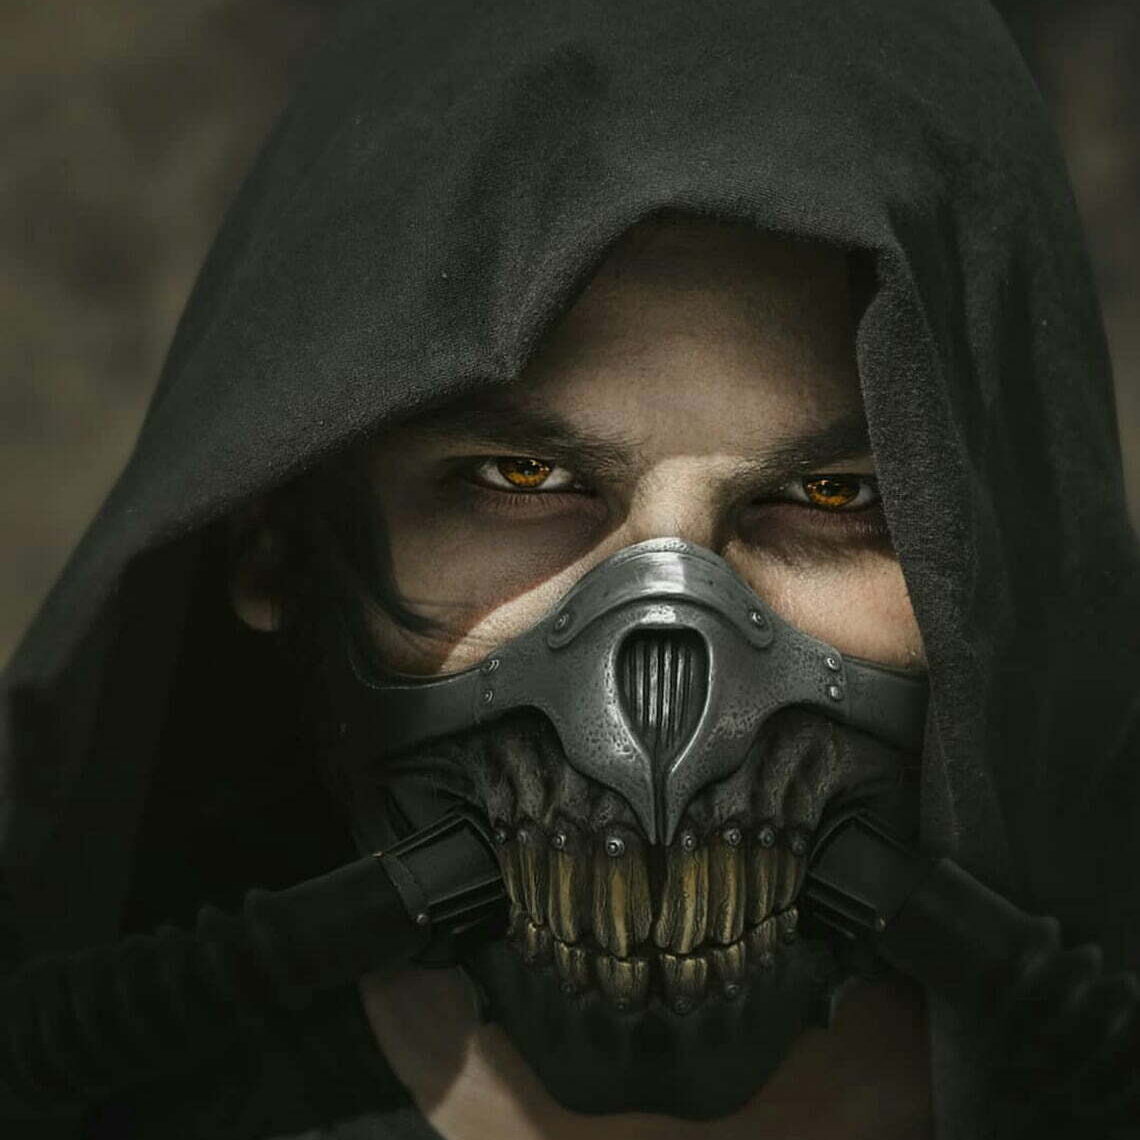 Man Warrior Mask Face Mask Cape  - 20543339 / Pixabay